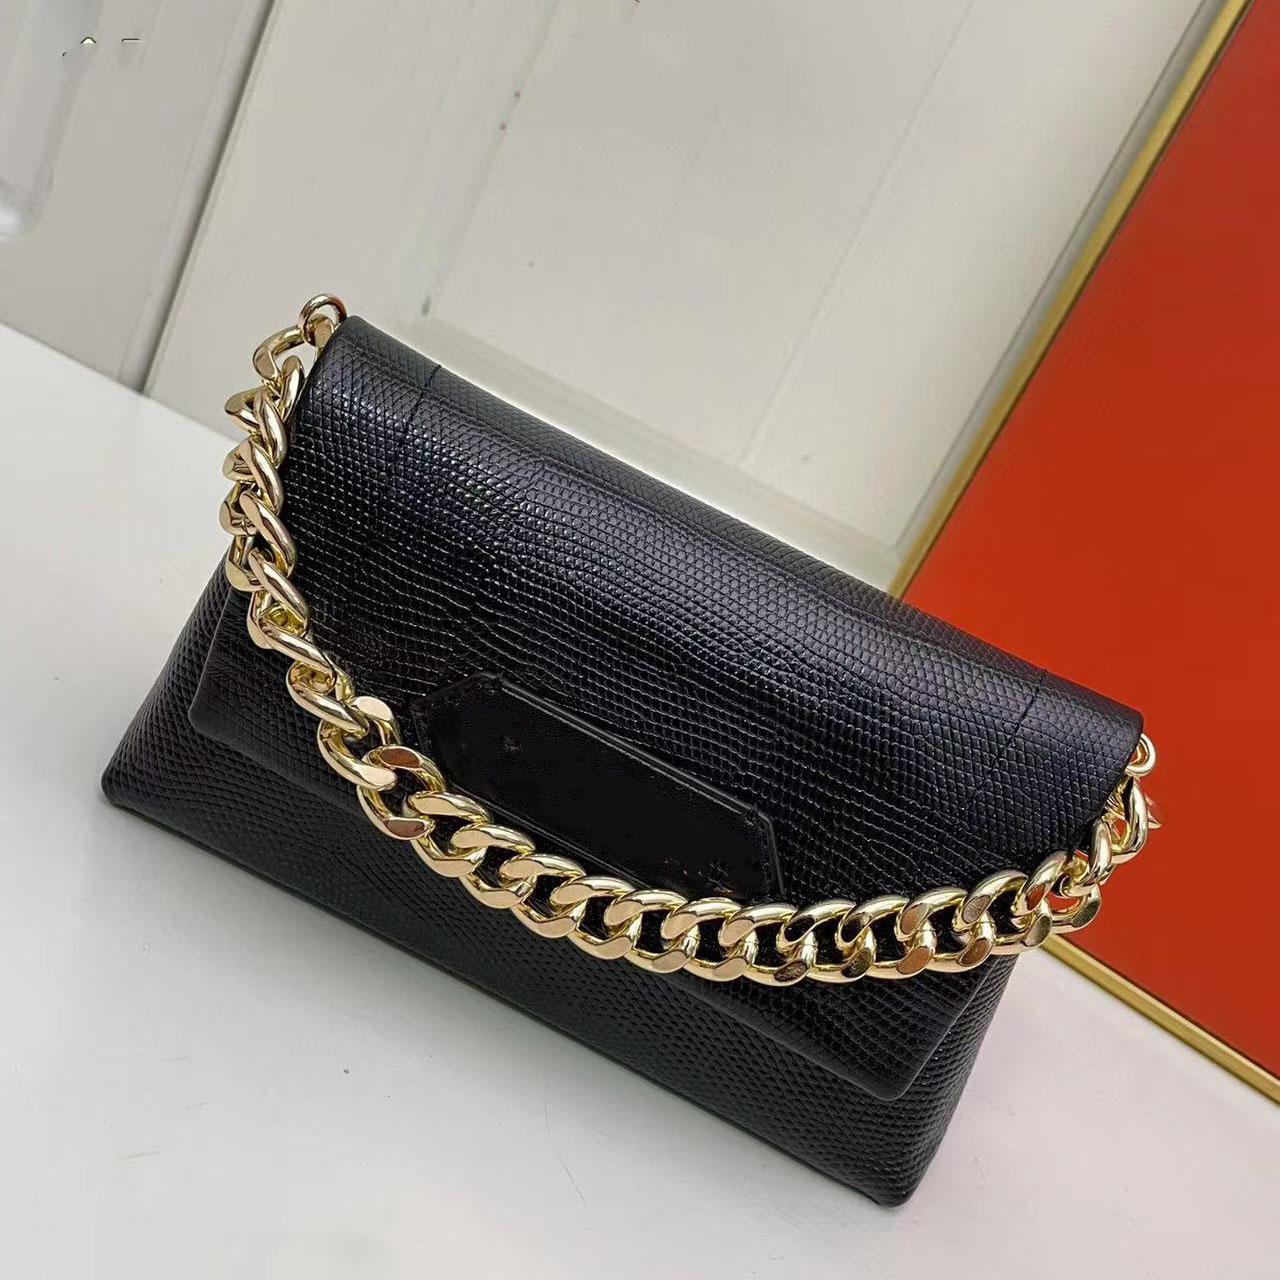 New Style Top Serpentine Tote Bag Tf Handbags Flap Gold Chain Designer Handbag Women Corss-Bady Bags Fashion Luxury Crocodile Ladies Shoulder Bag Wide Chain 20Cm